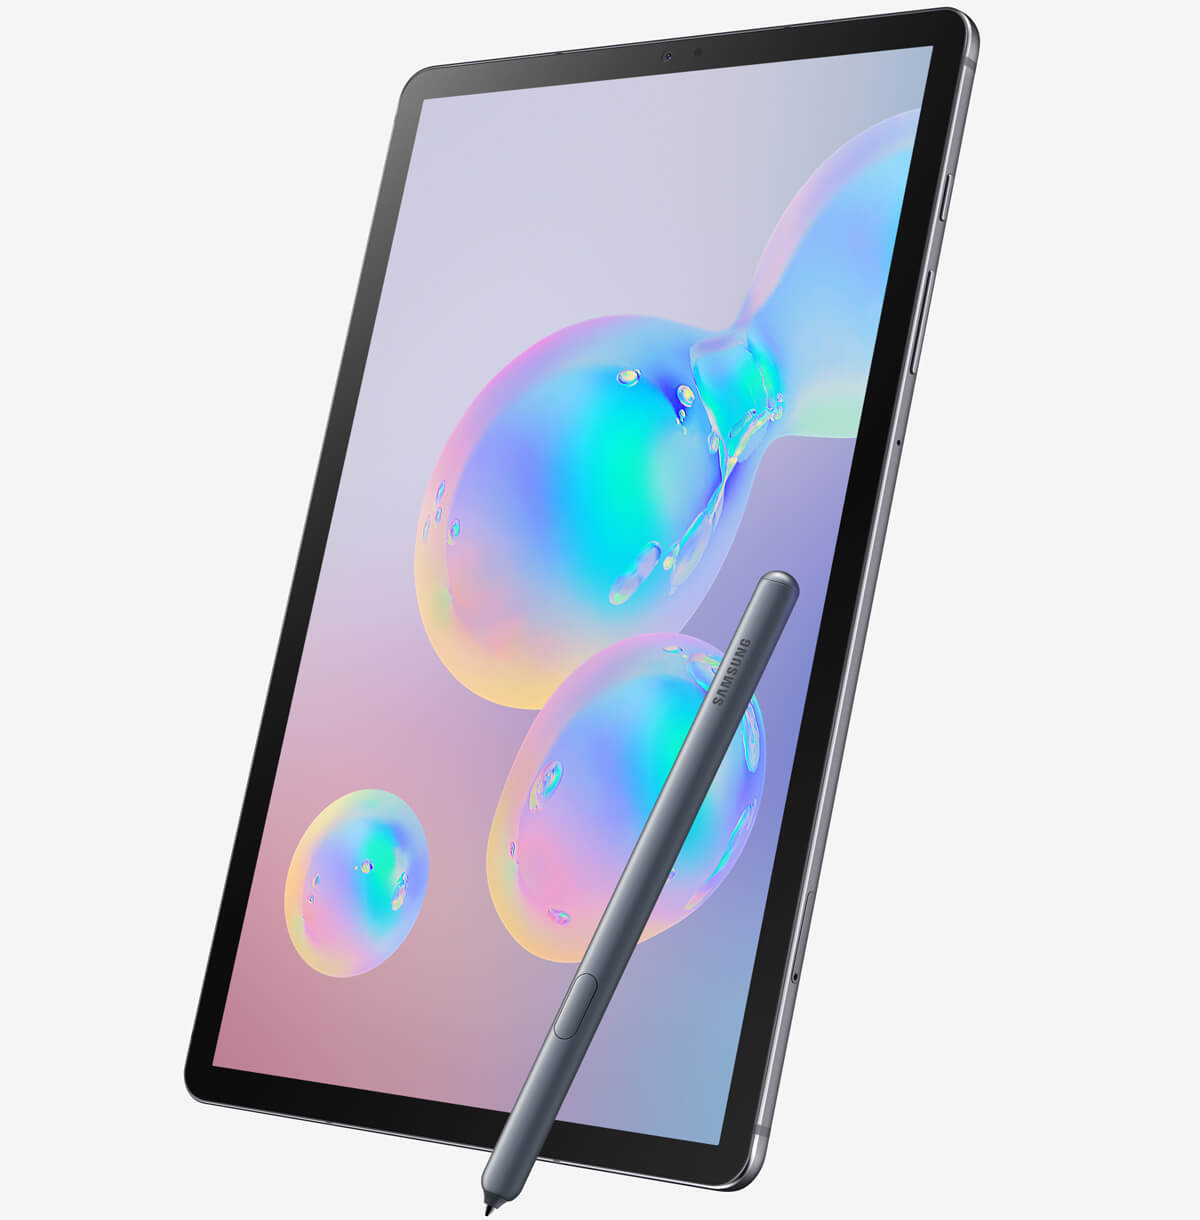 uyarmak Kök Yüksek sesle konuşmak  Samsung unveils Galaxy Tab S6 with 10.5-inch OLED display, Snapdragon 855  and magnetic S Pen | TechSpot